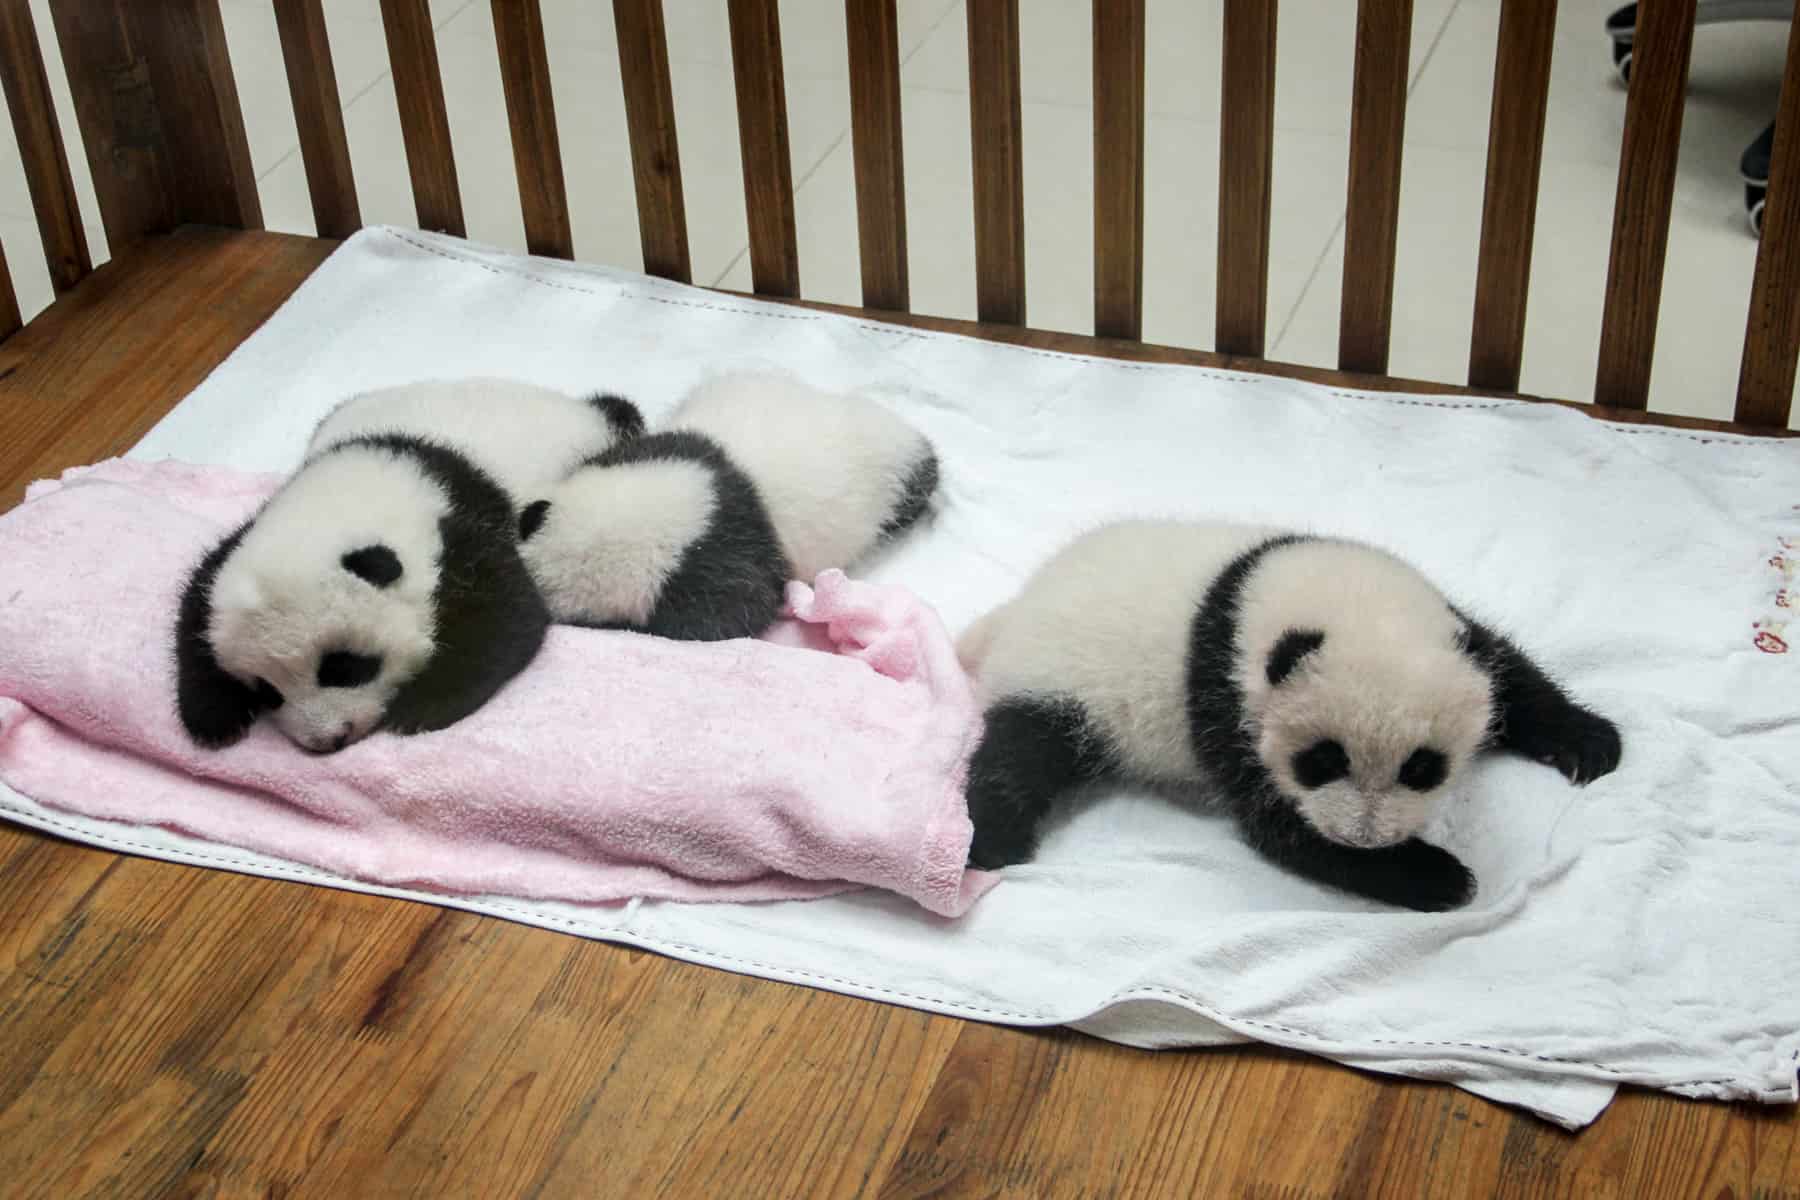 Three baby pandas snuggle and sleep on pink and white blankets at the Giant Panda Breeding Base in Chengdu, China 